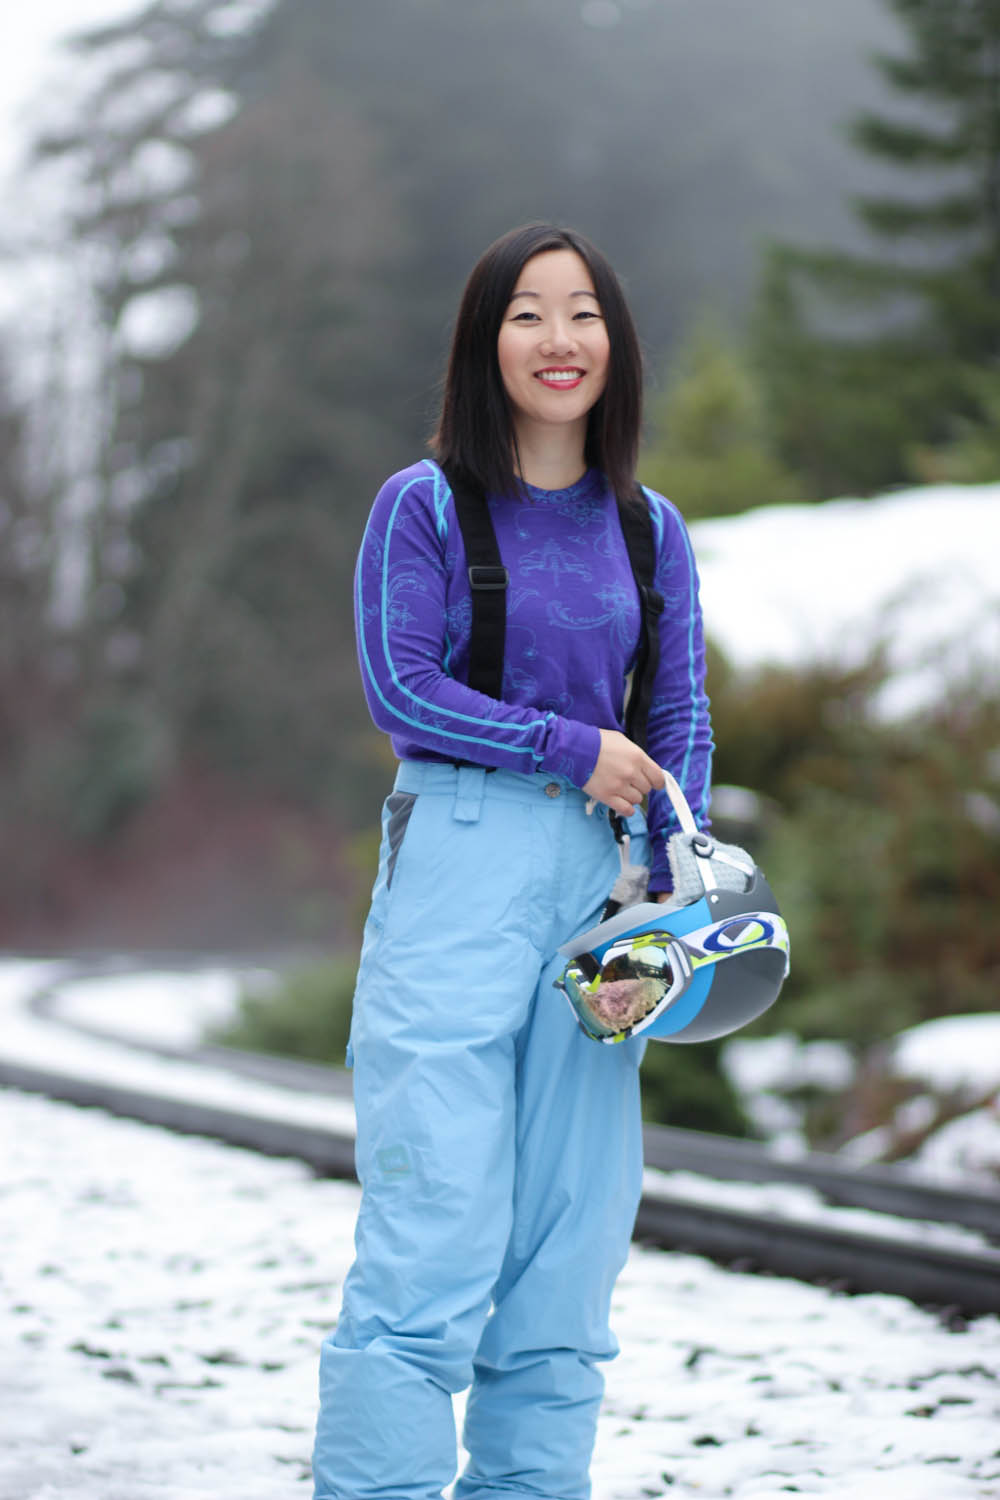 Helly Hansen ski gear, Whistler BC | Stuff I Love, Vancouver fashion blogger